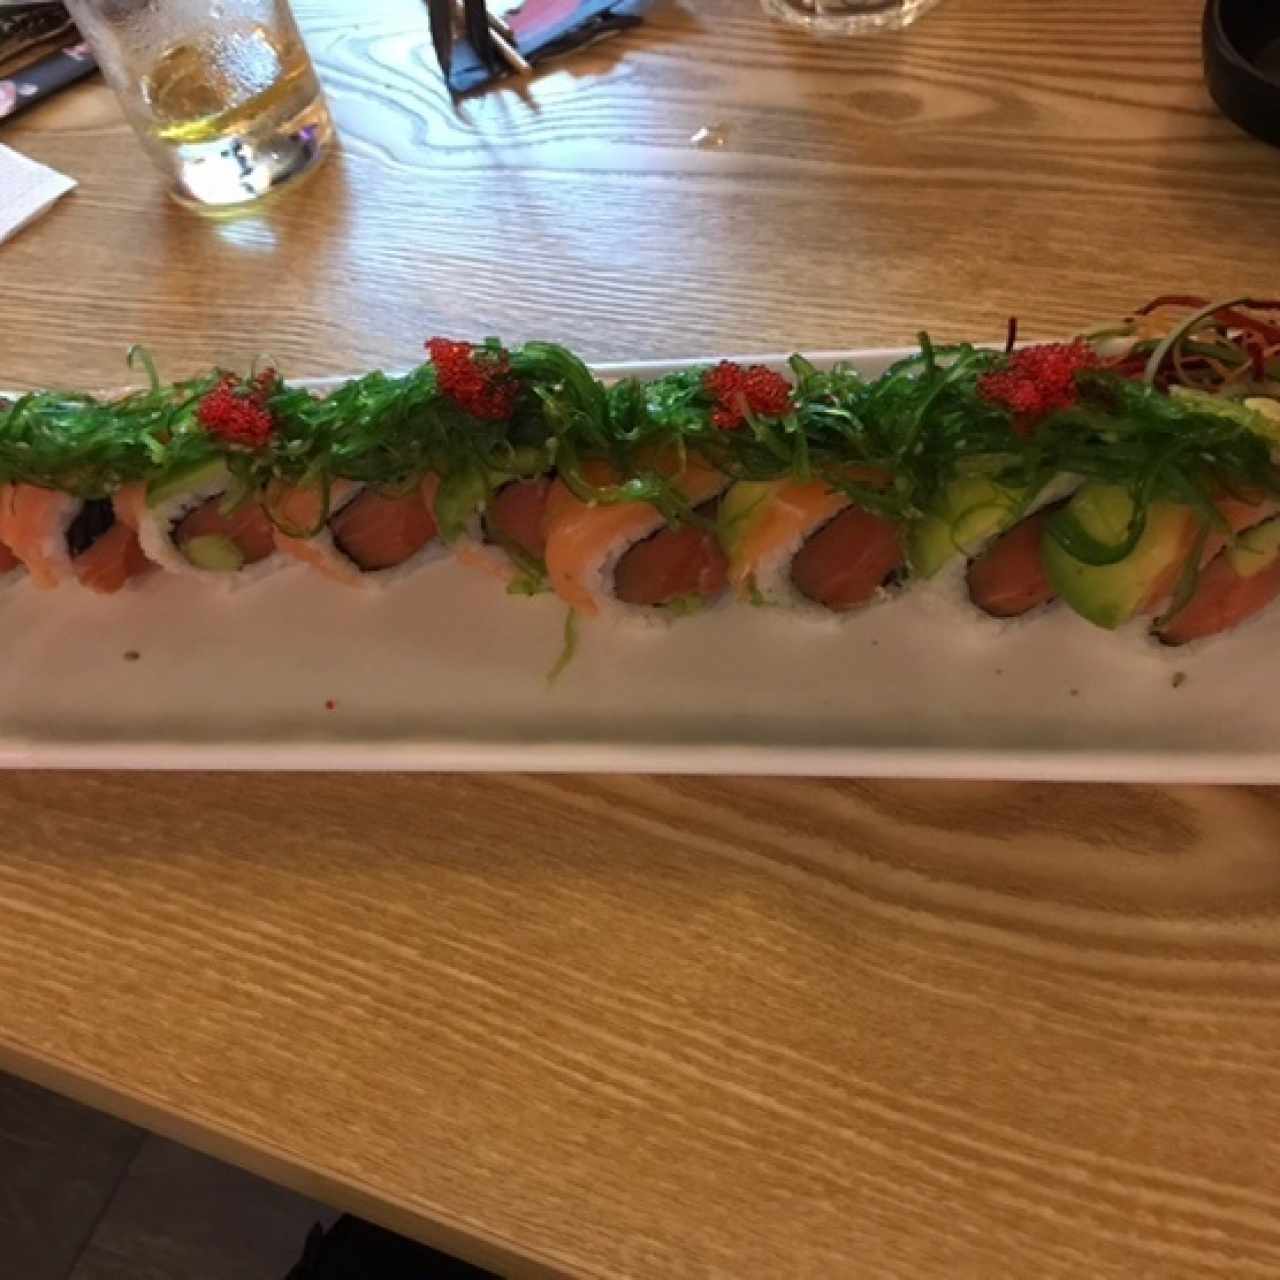 Sushi rolls - Oh-Alaska roll